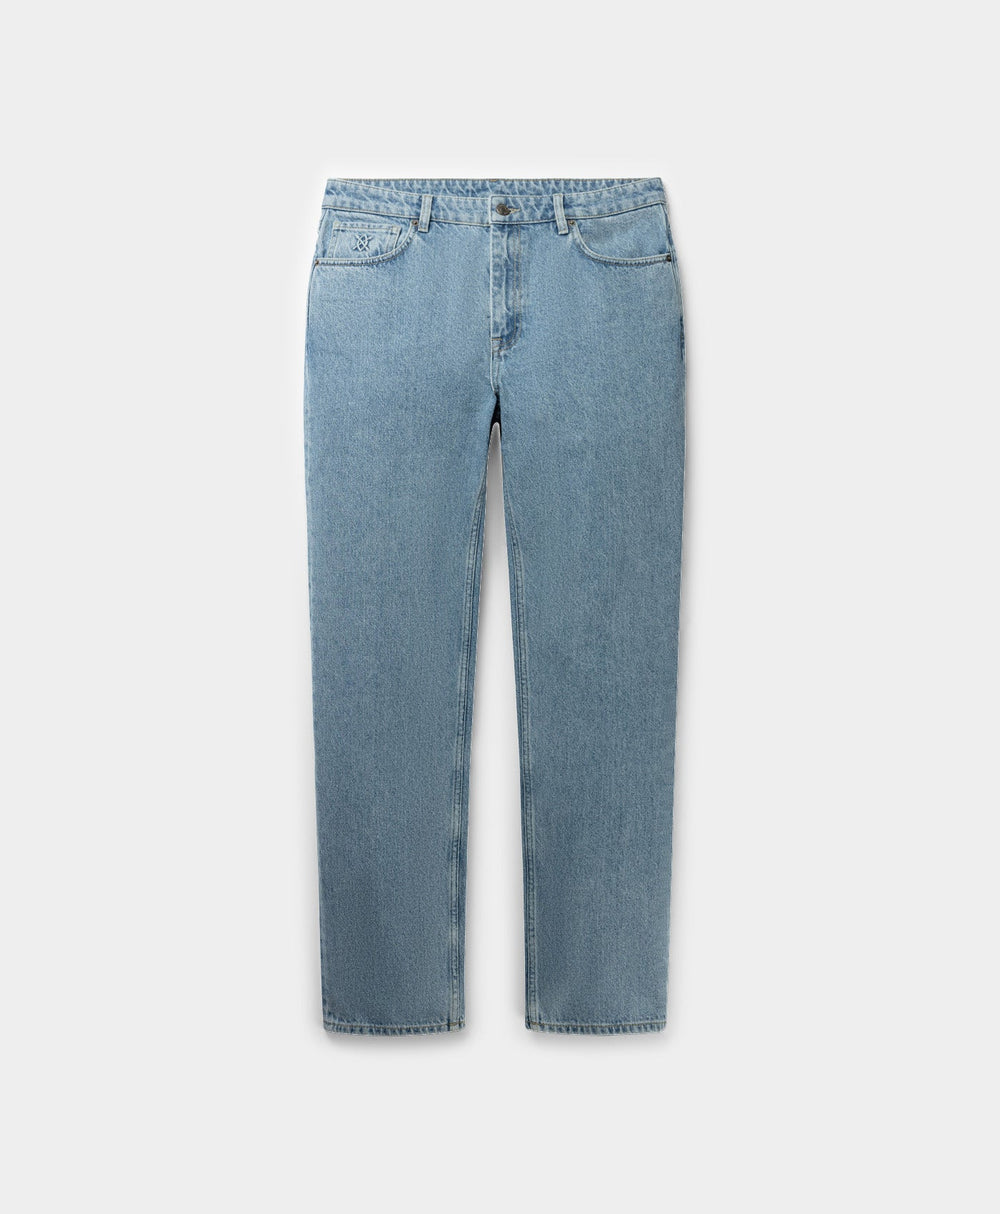 Denim Jeans Lungi #Extra Large Lungi 2.25 Meters Dark Blue Printed Designer  A3 Model Lungi 999 Brand Offer Pack #Denim #Jeans #Denimlungi #Xlsize  #Lungi #Lungies #Lungis #Bigsize : : Clothing & Accessories